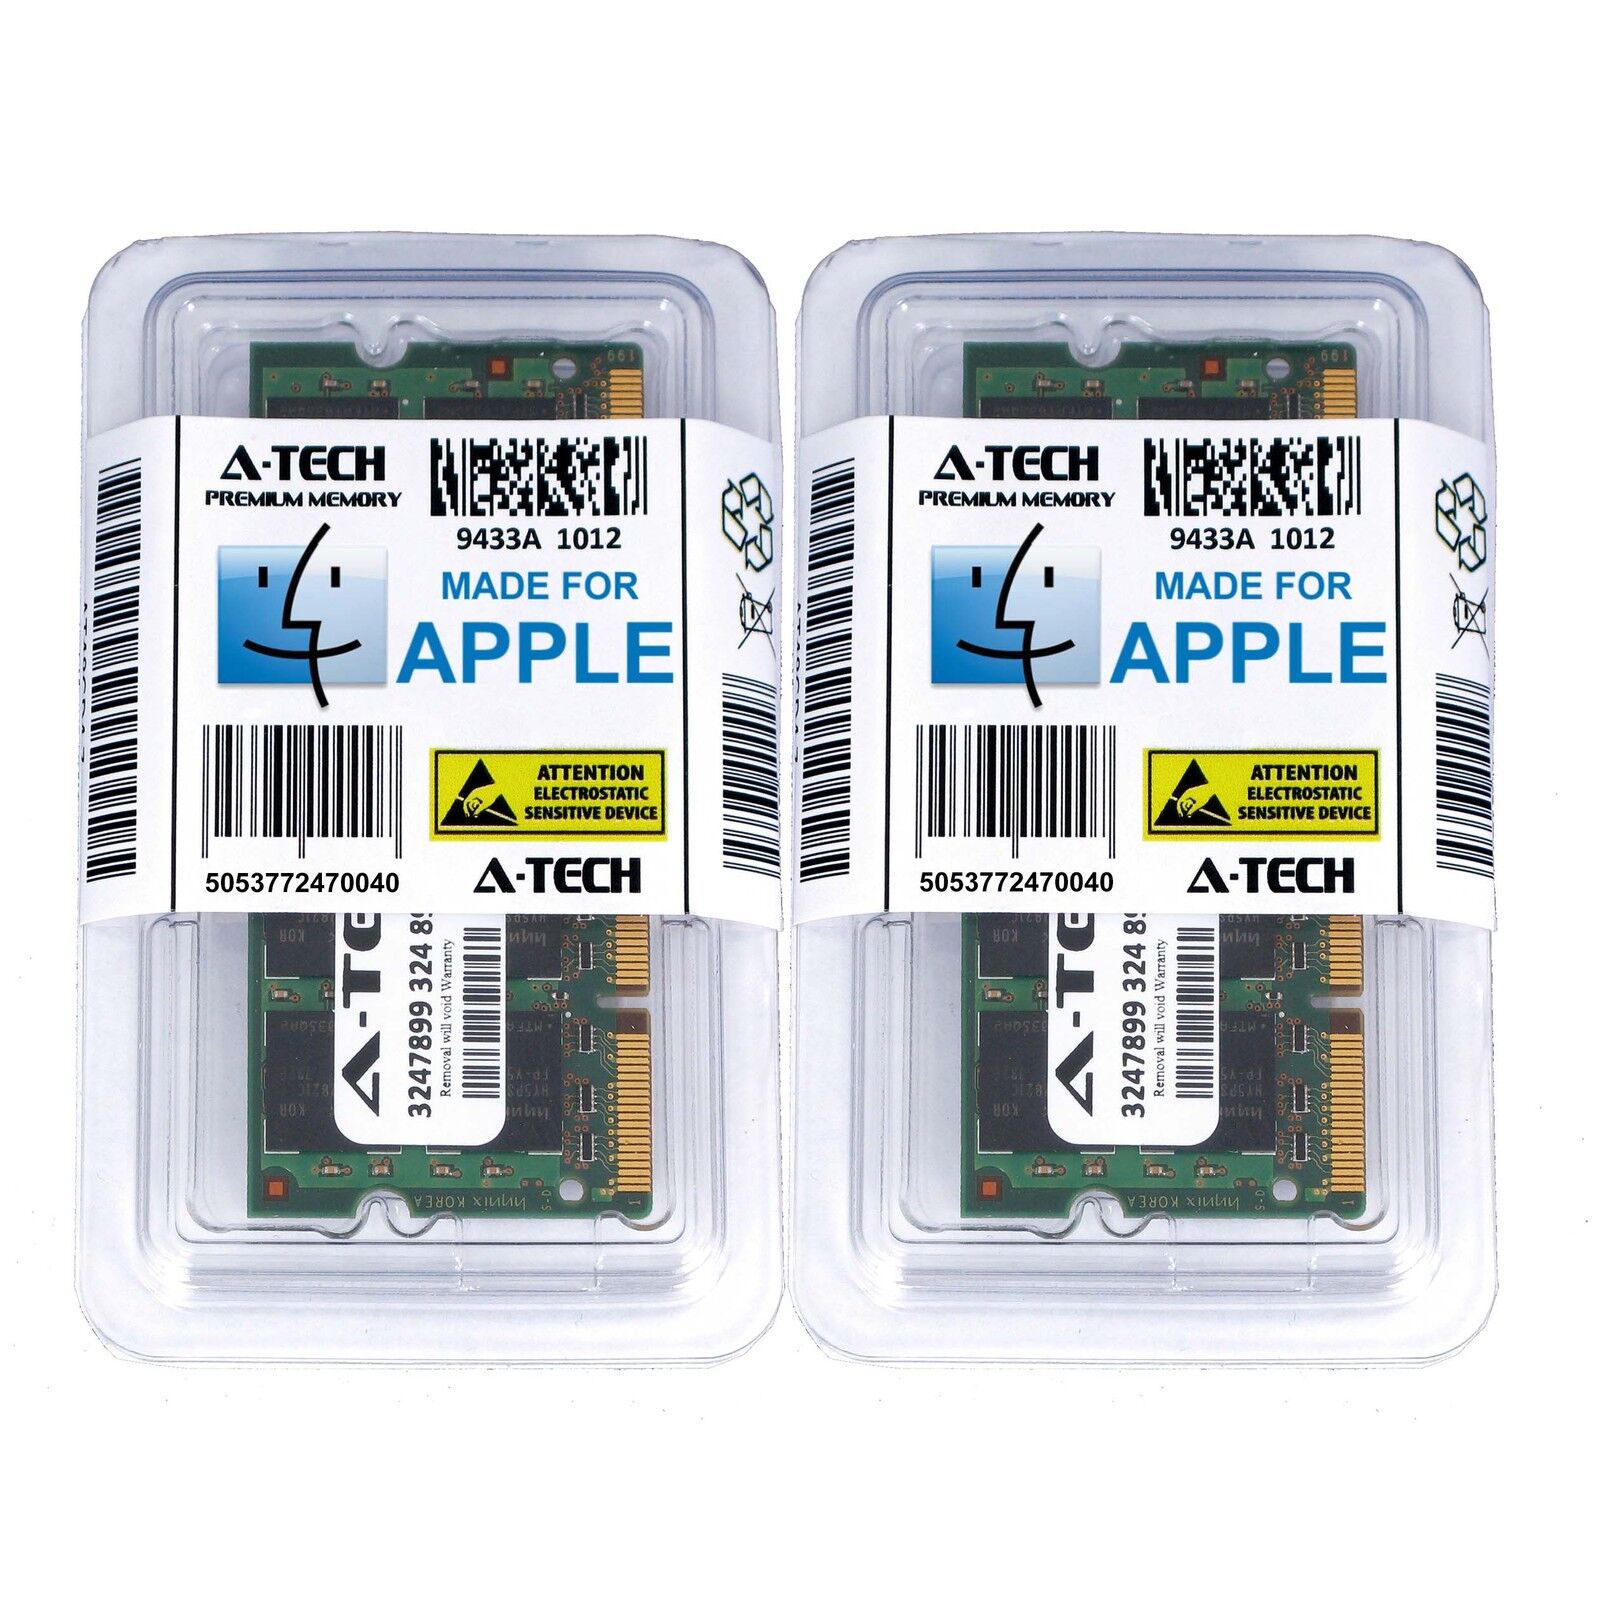 6gb Kit 4GB & 2GB Module Apple Macbook iMac A1181 PC2-6400 800 Sodimm Memory Ram